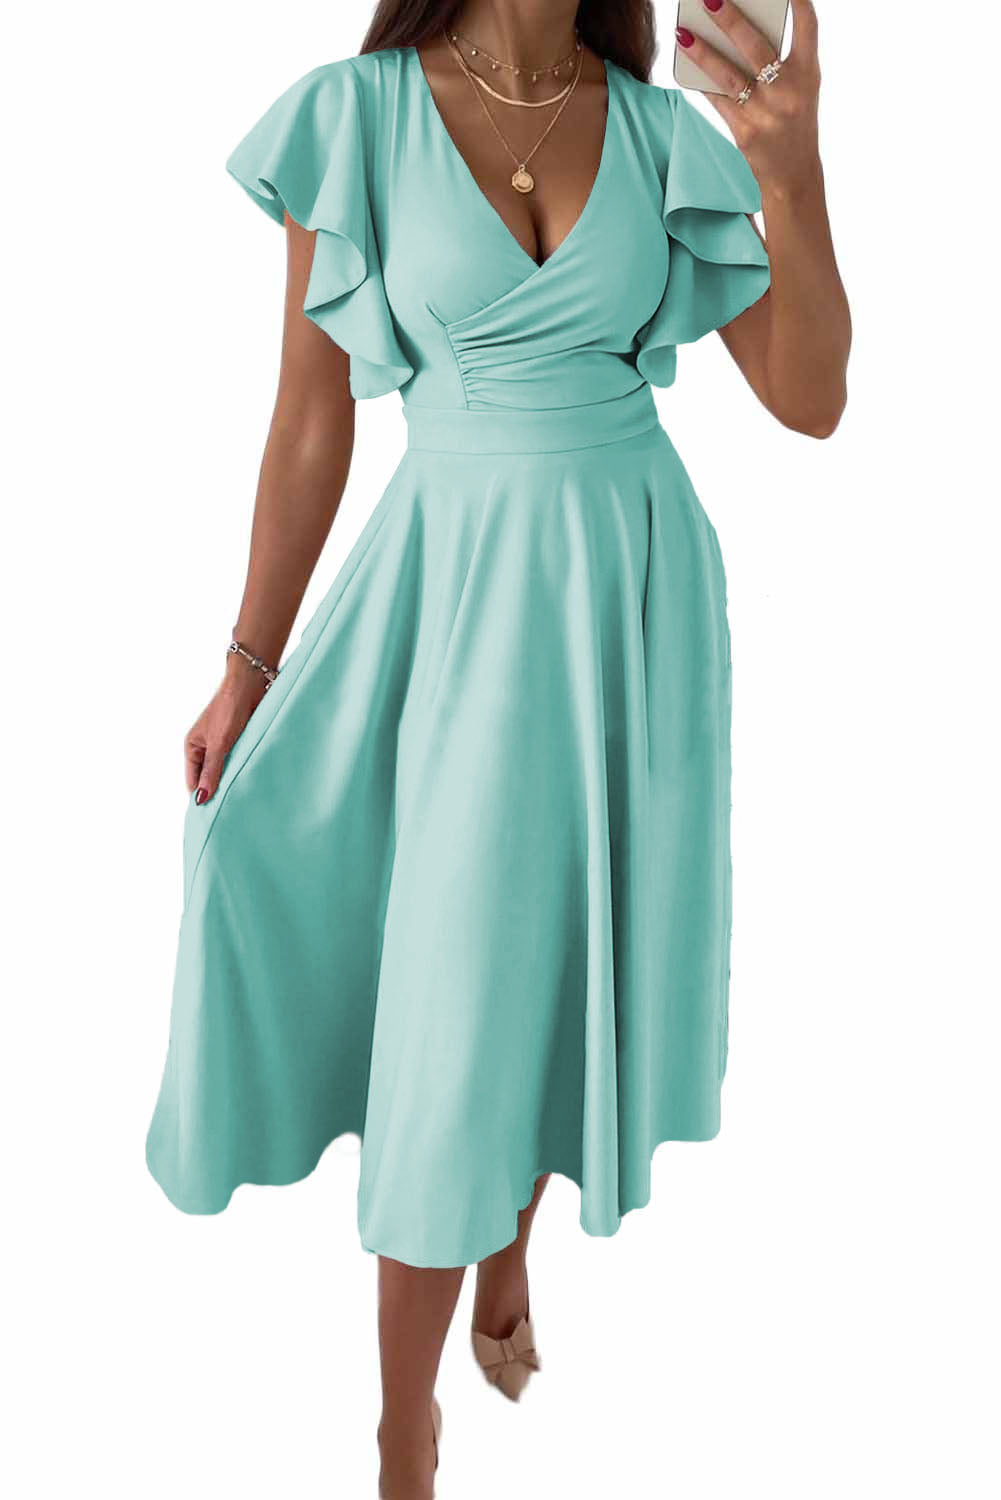 LC6110363-4-S, LC6110363-4-M, LC6110363-4-L, LC6110363-4-XL, LC6110363-4-2XL, Sky Blue Womens V Neck Ruffle Sleeve Wrap Dress Midi Dress Cocktail Party Dress